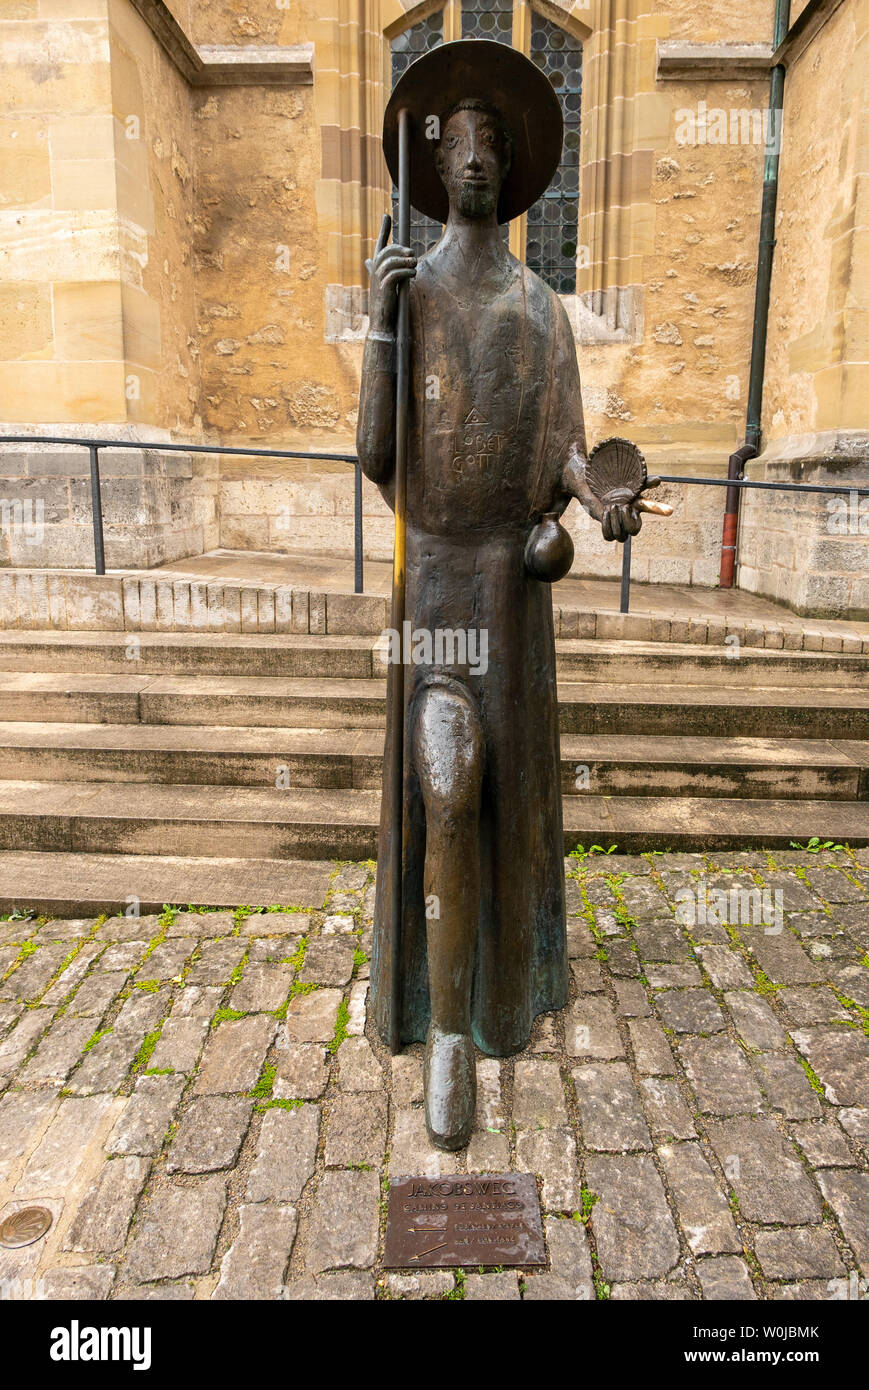 ROTHENBURG OB DER TAUBER, GERMANY - JUNE 12 , 2019: sculpture of a pilgrim from the Camino de Santiago Stock Photo